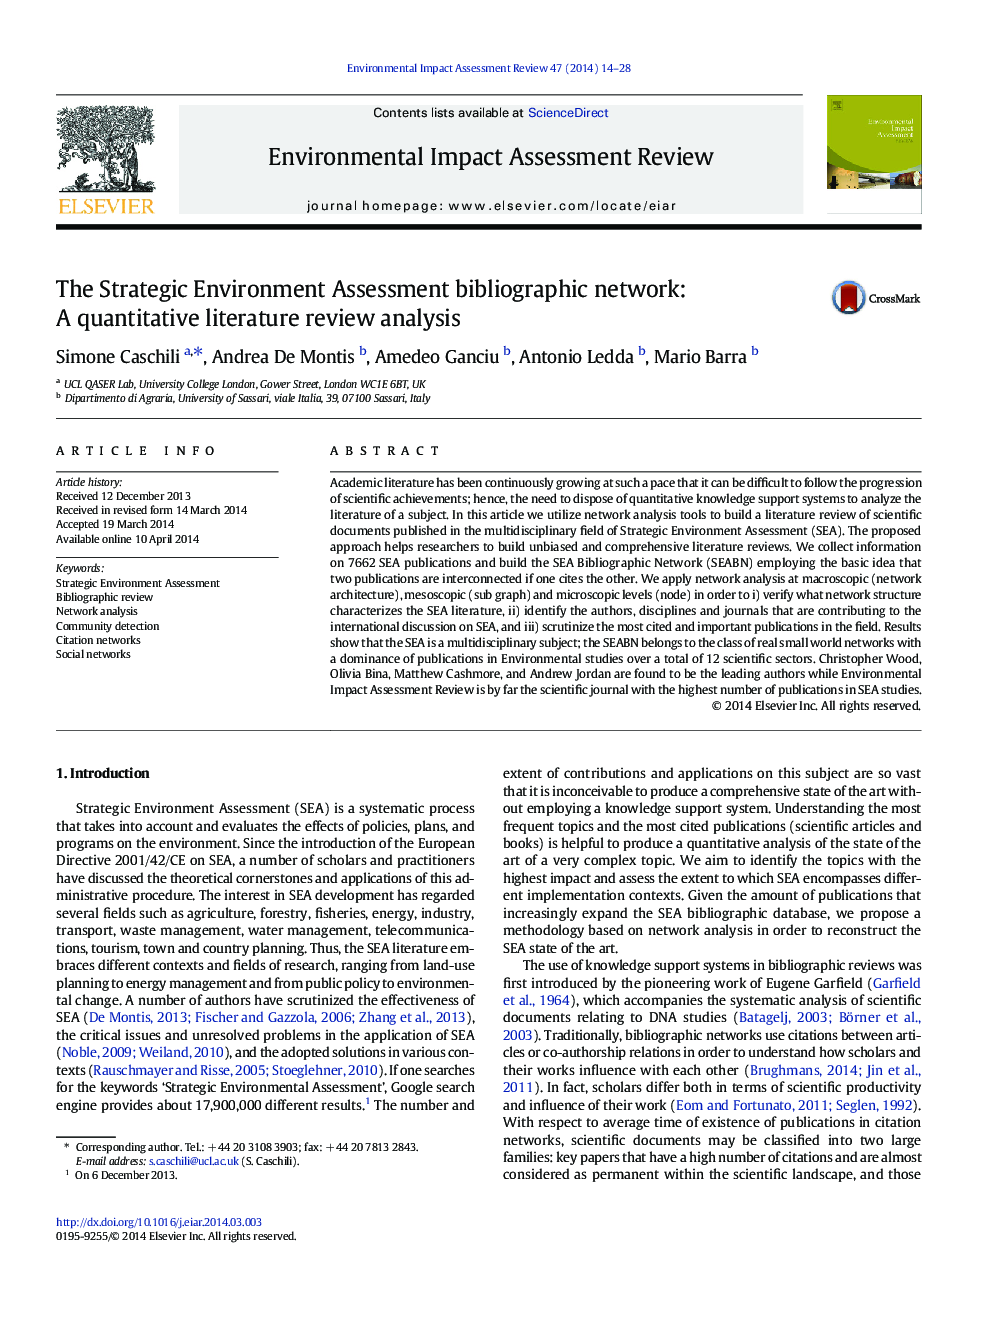 The Strategic Environment Assessment bibliographic network: A quantitative literature review analysis